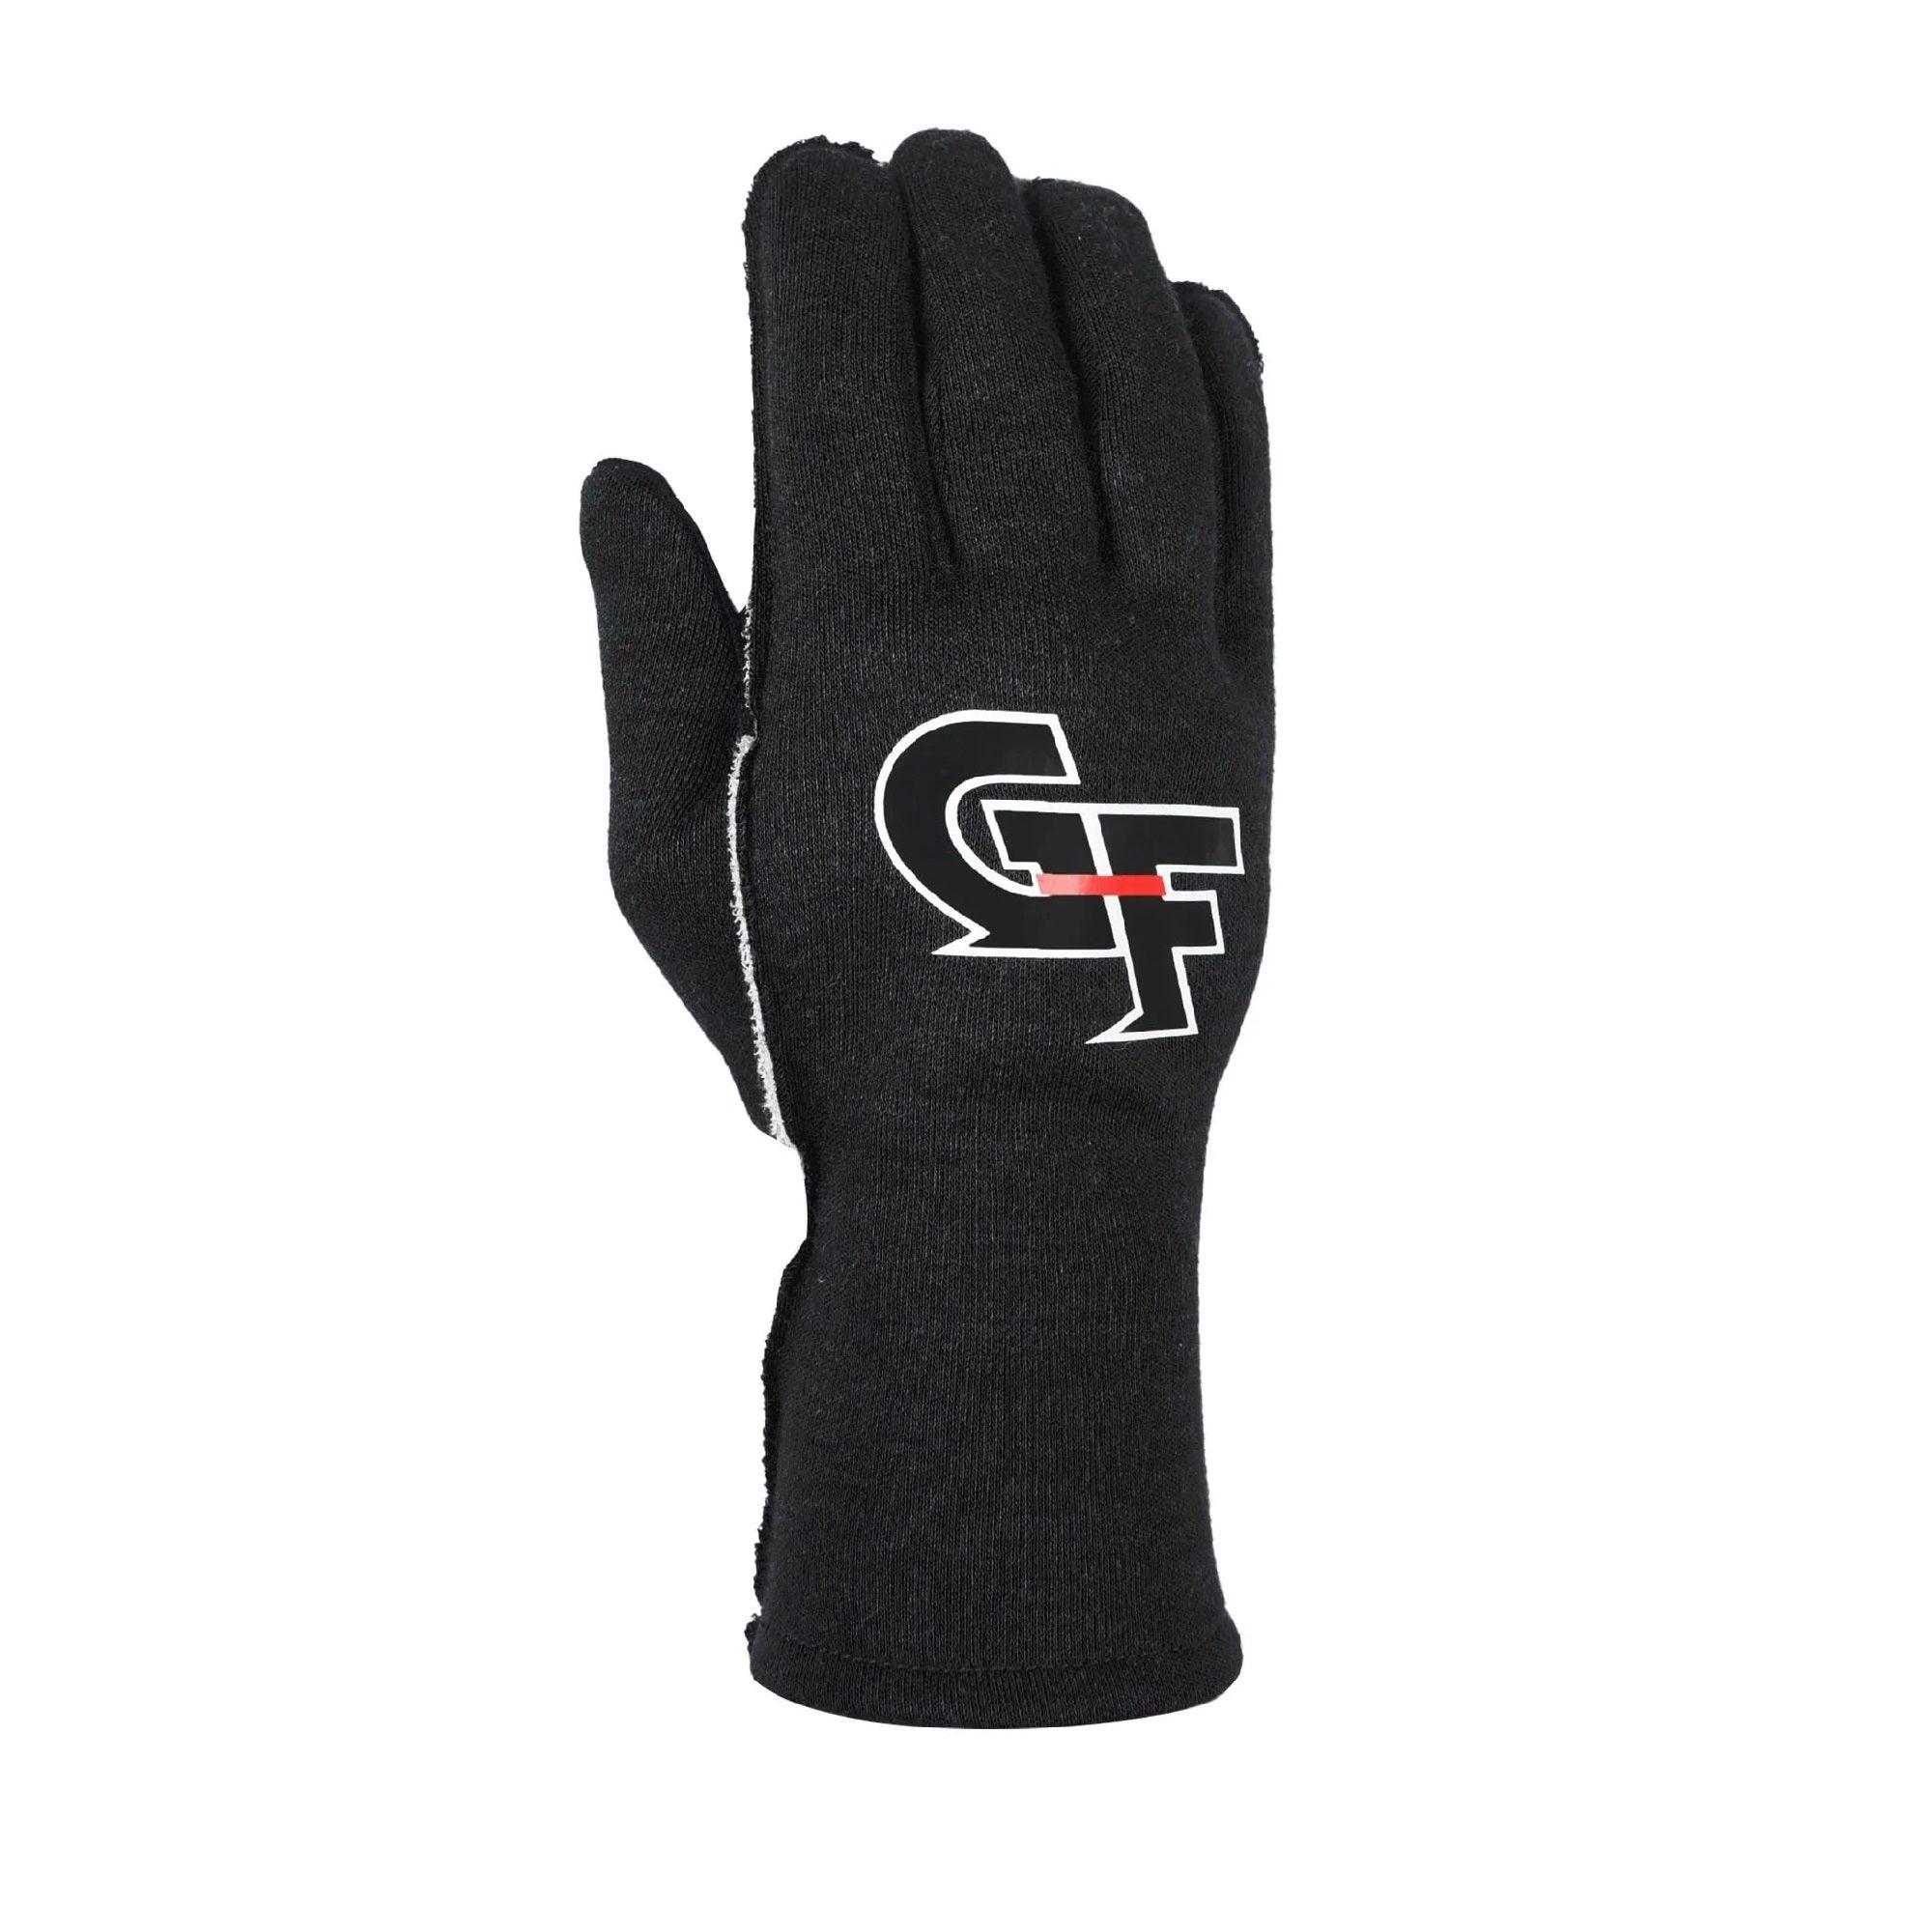 Gloves G-Limit Medium Black - Burlile Performance Products